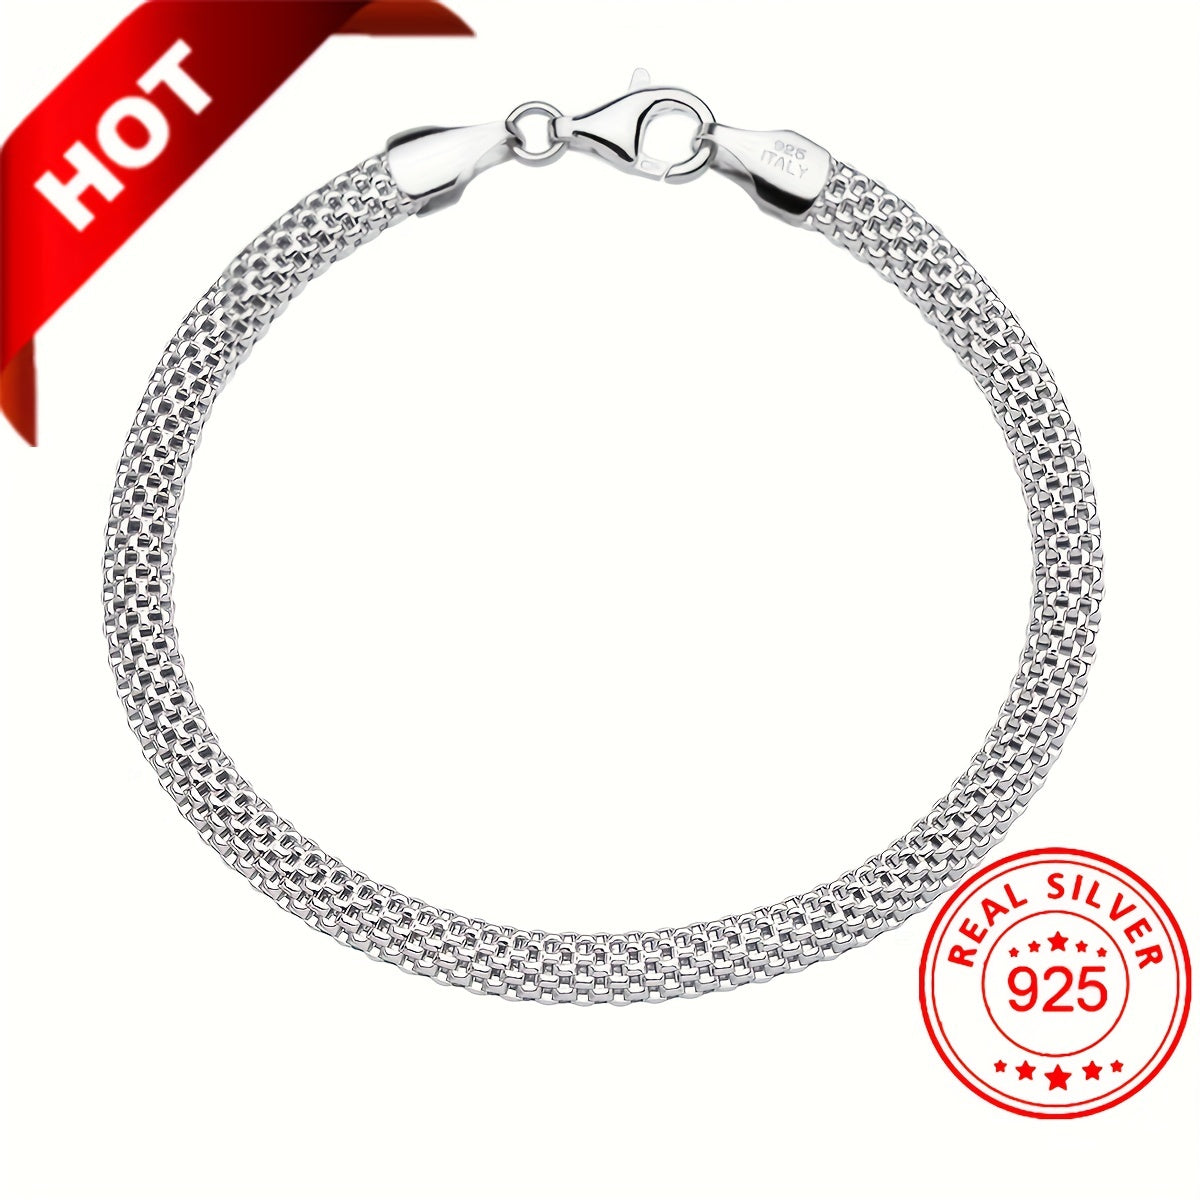 925 Sterling Silver Mesh Link Chain Bracelet, Unisex